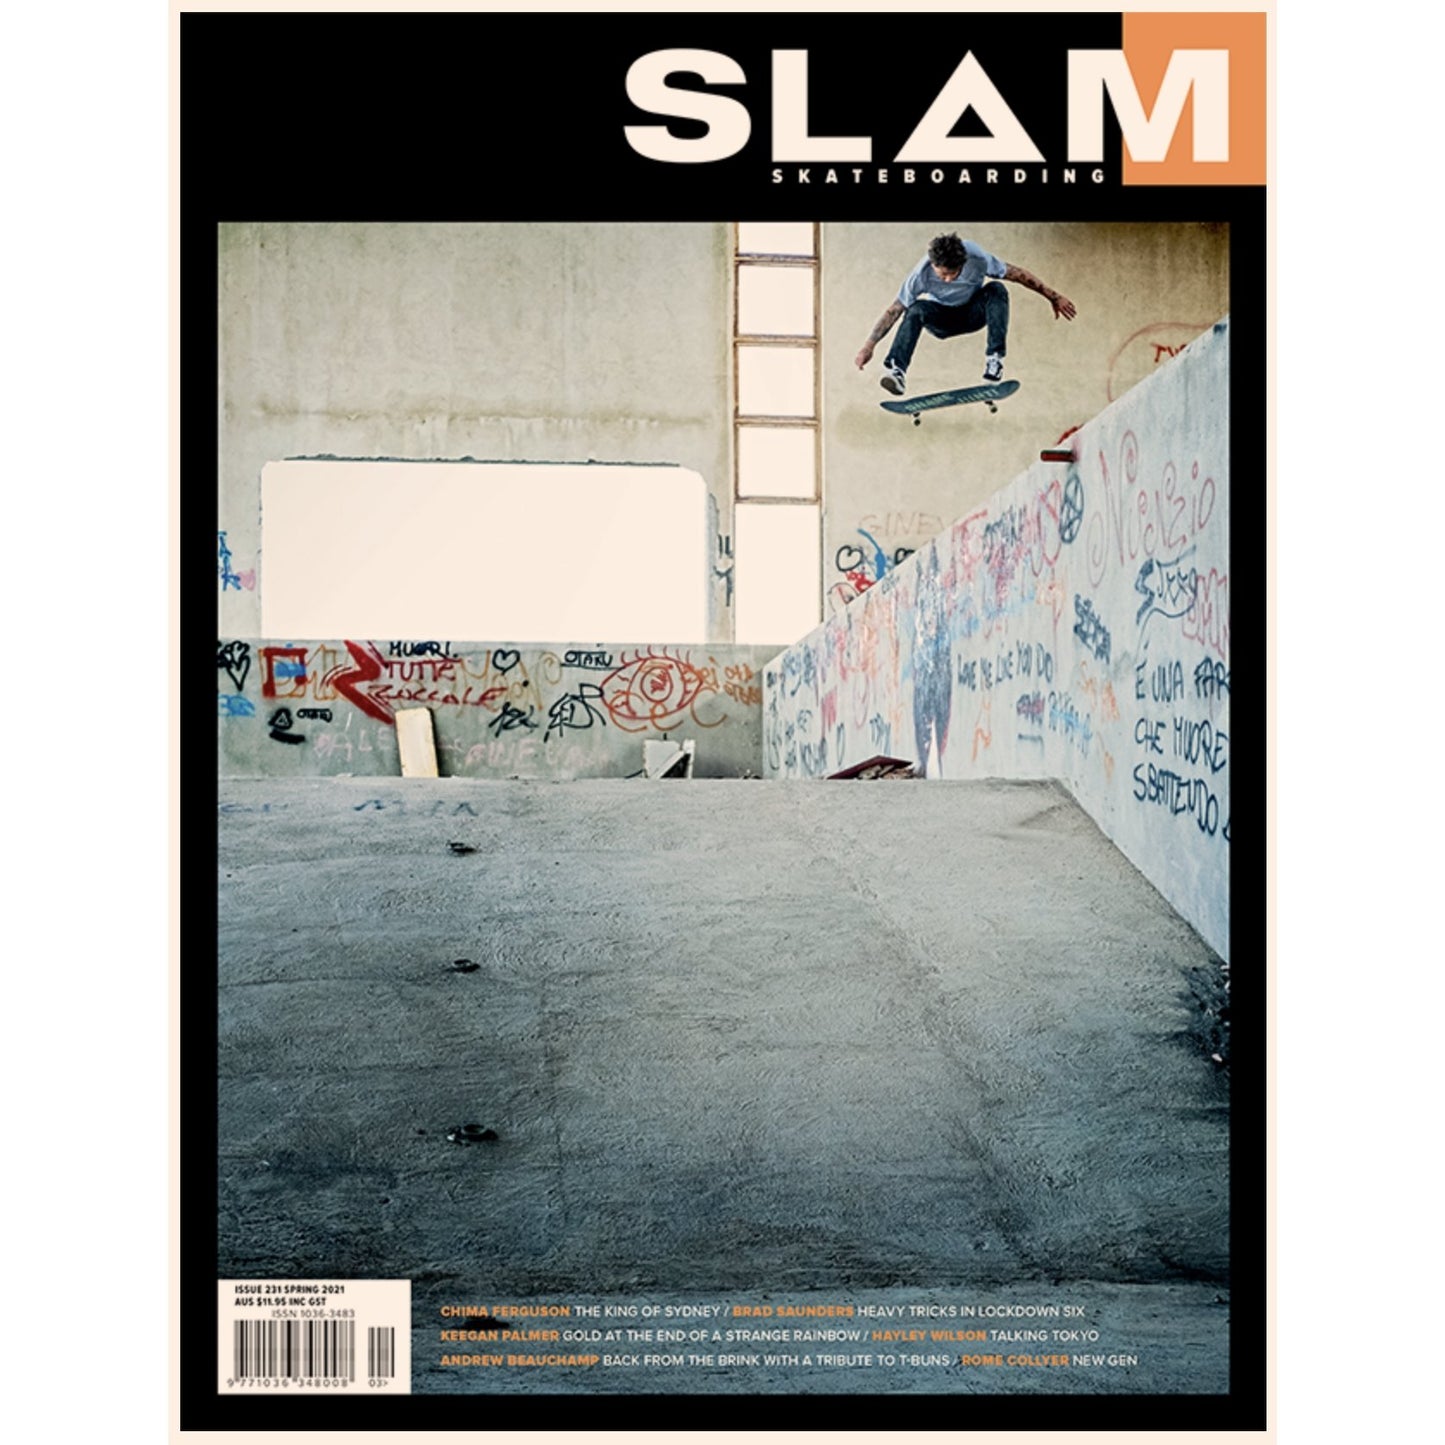 SLAM Magazine - Issue #231 - Parliamentskateshop